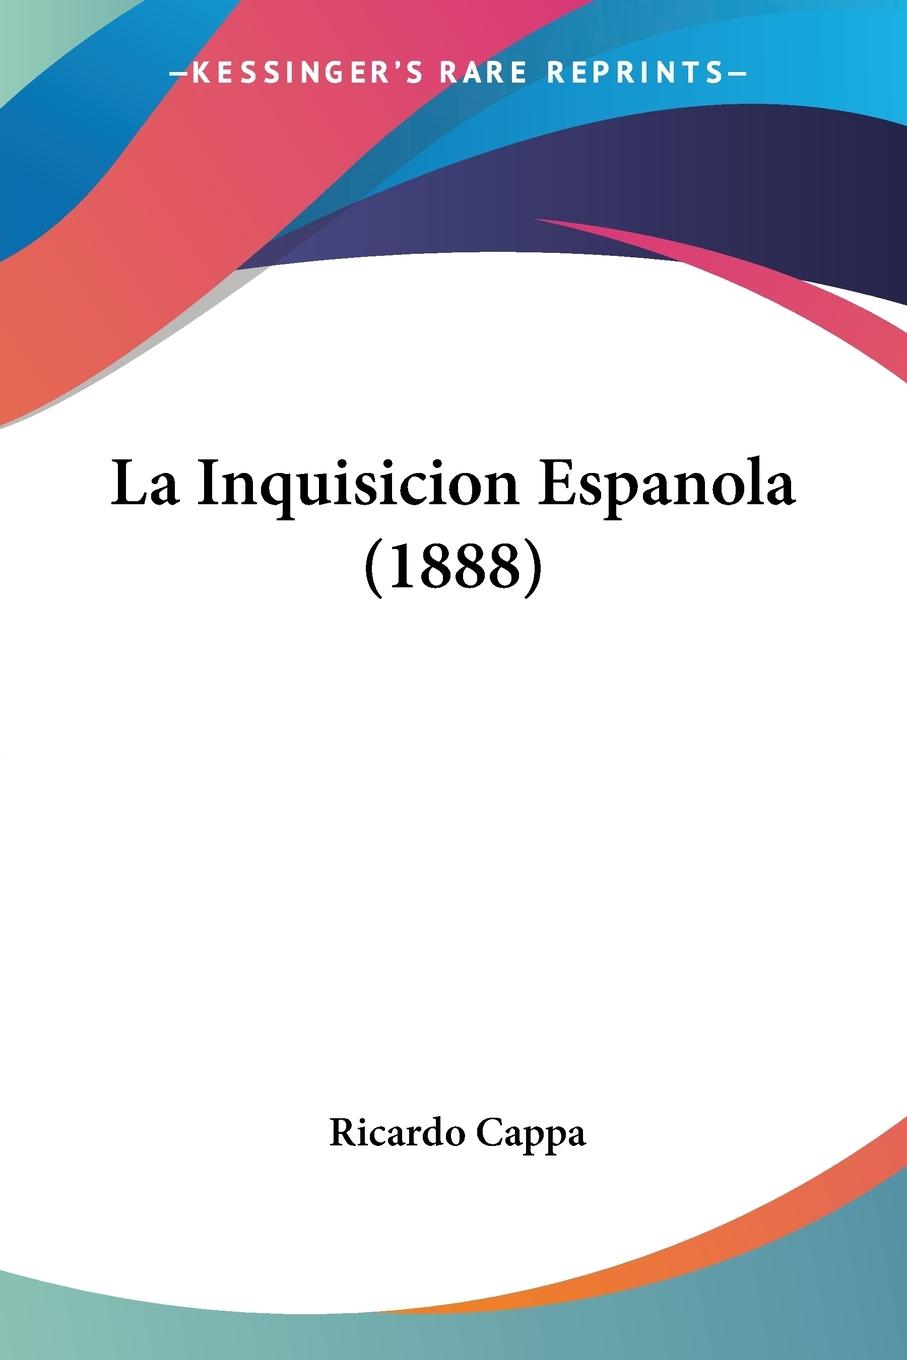 La Inquisicion Espanola (1888) - Cappa, Ricardo